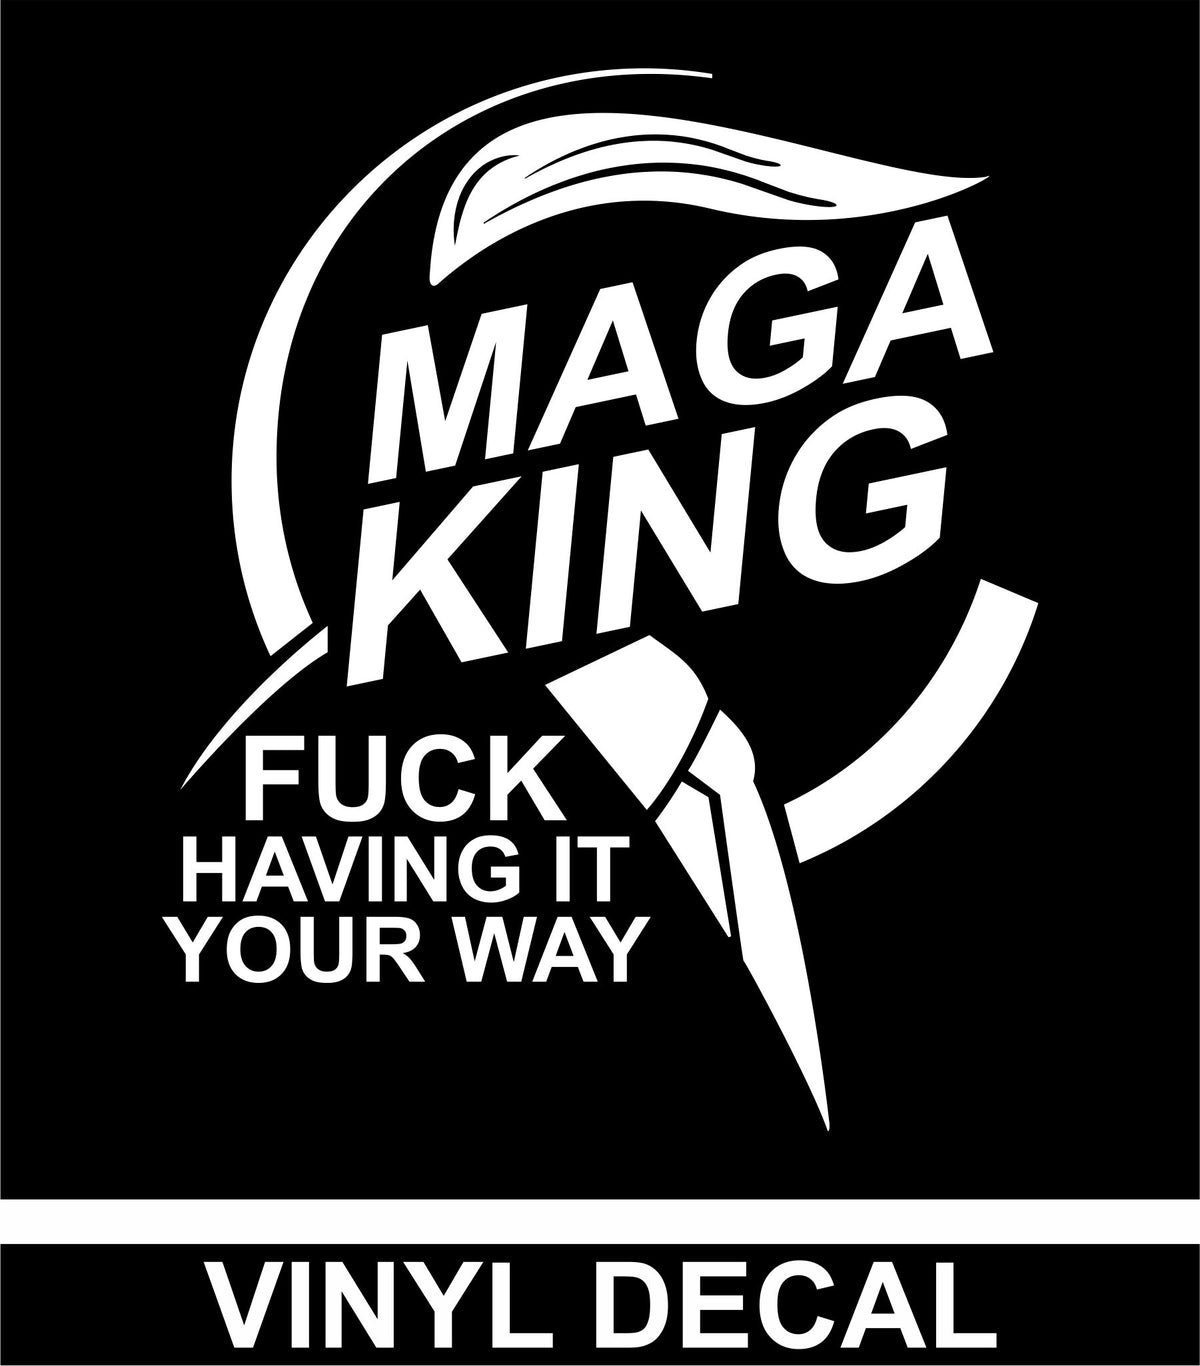 Maga King - Fuck Having It Your Way - Vinyl Decal  - Trump - Free Shipping